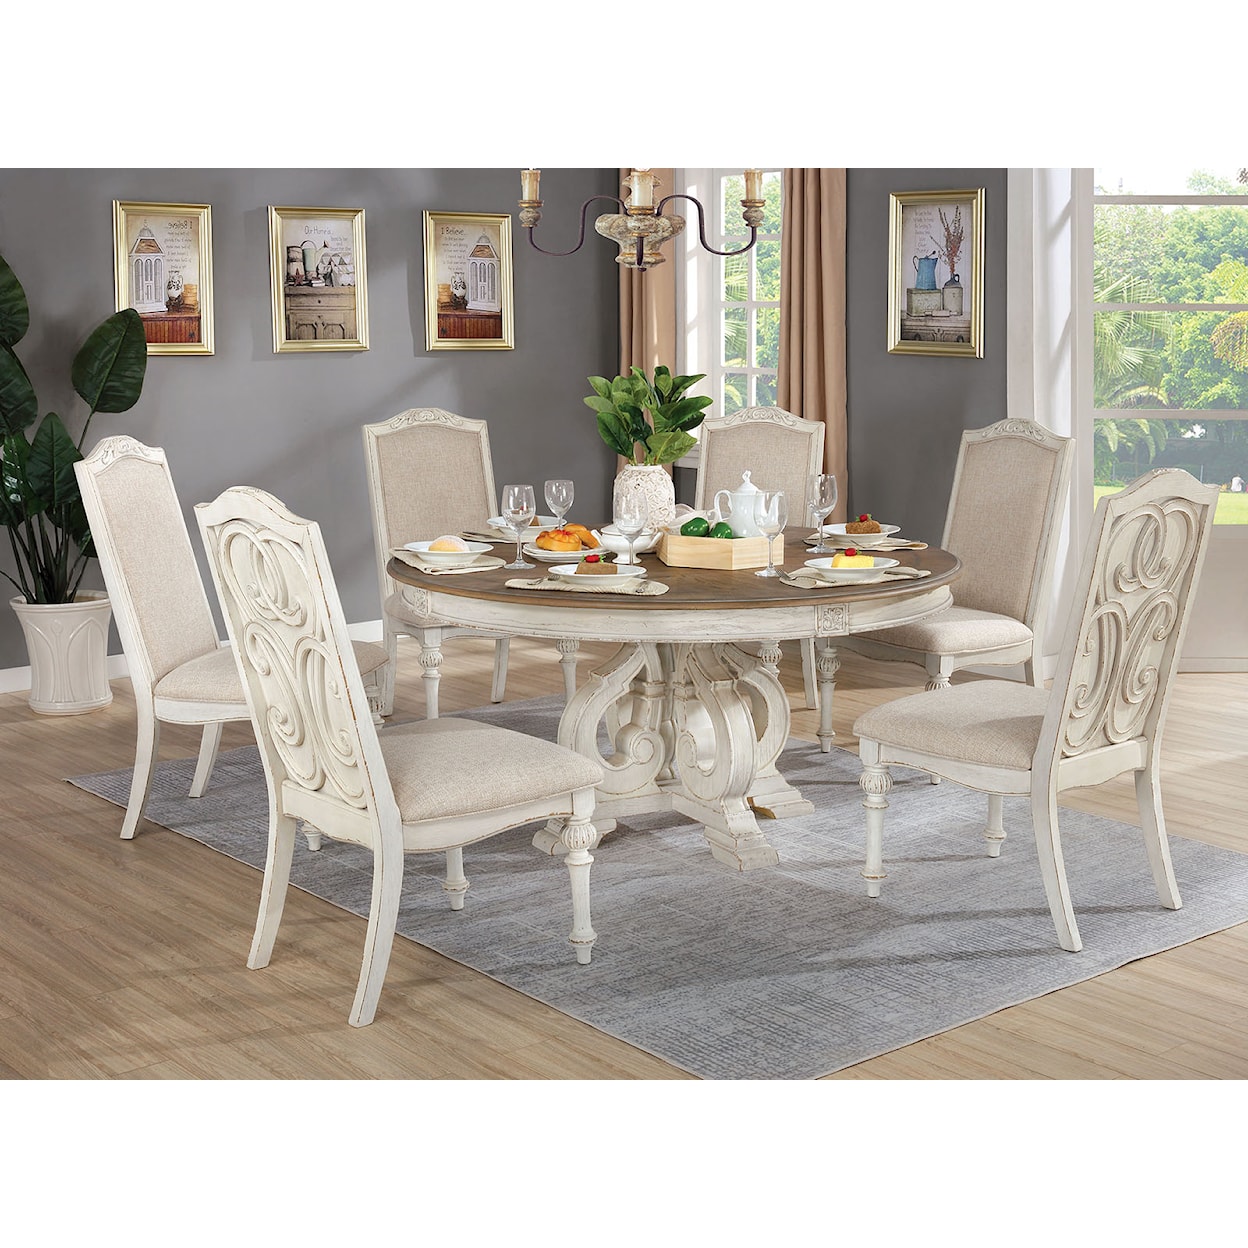 Furniture of America Arcadia 7-Piece Round Dining Set